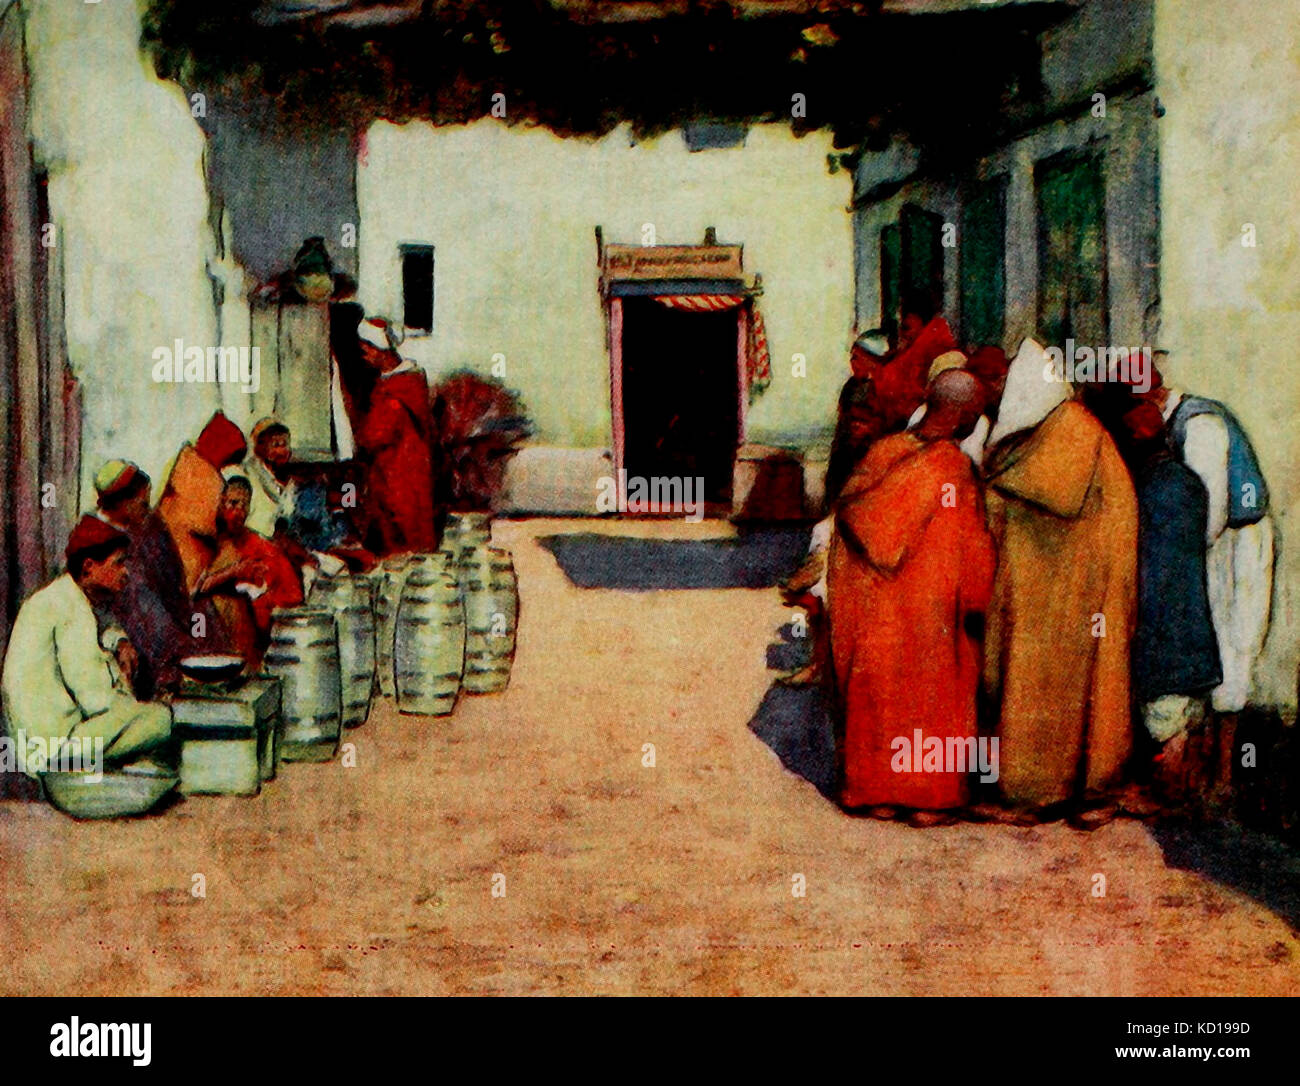 Ein Innenhof in Marokko, ca. 1900 Stockfoto